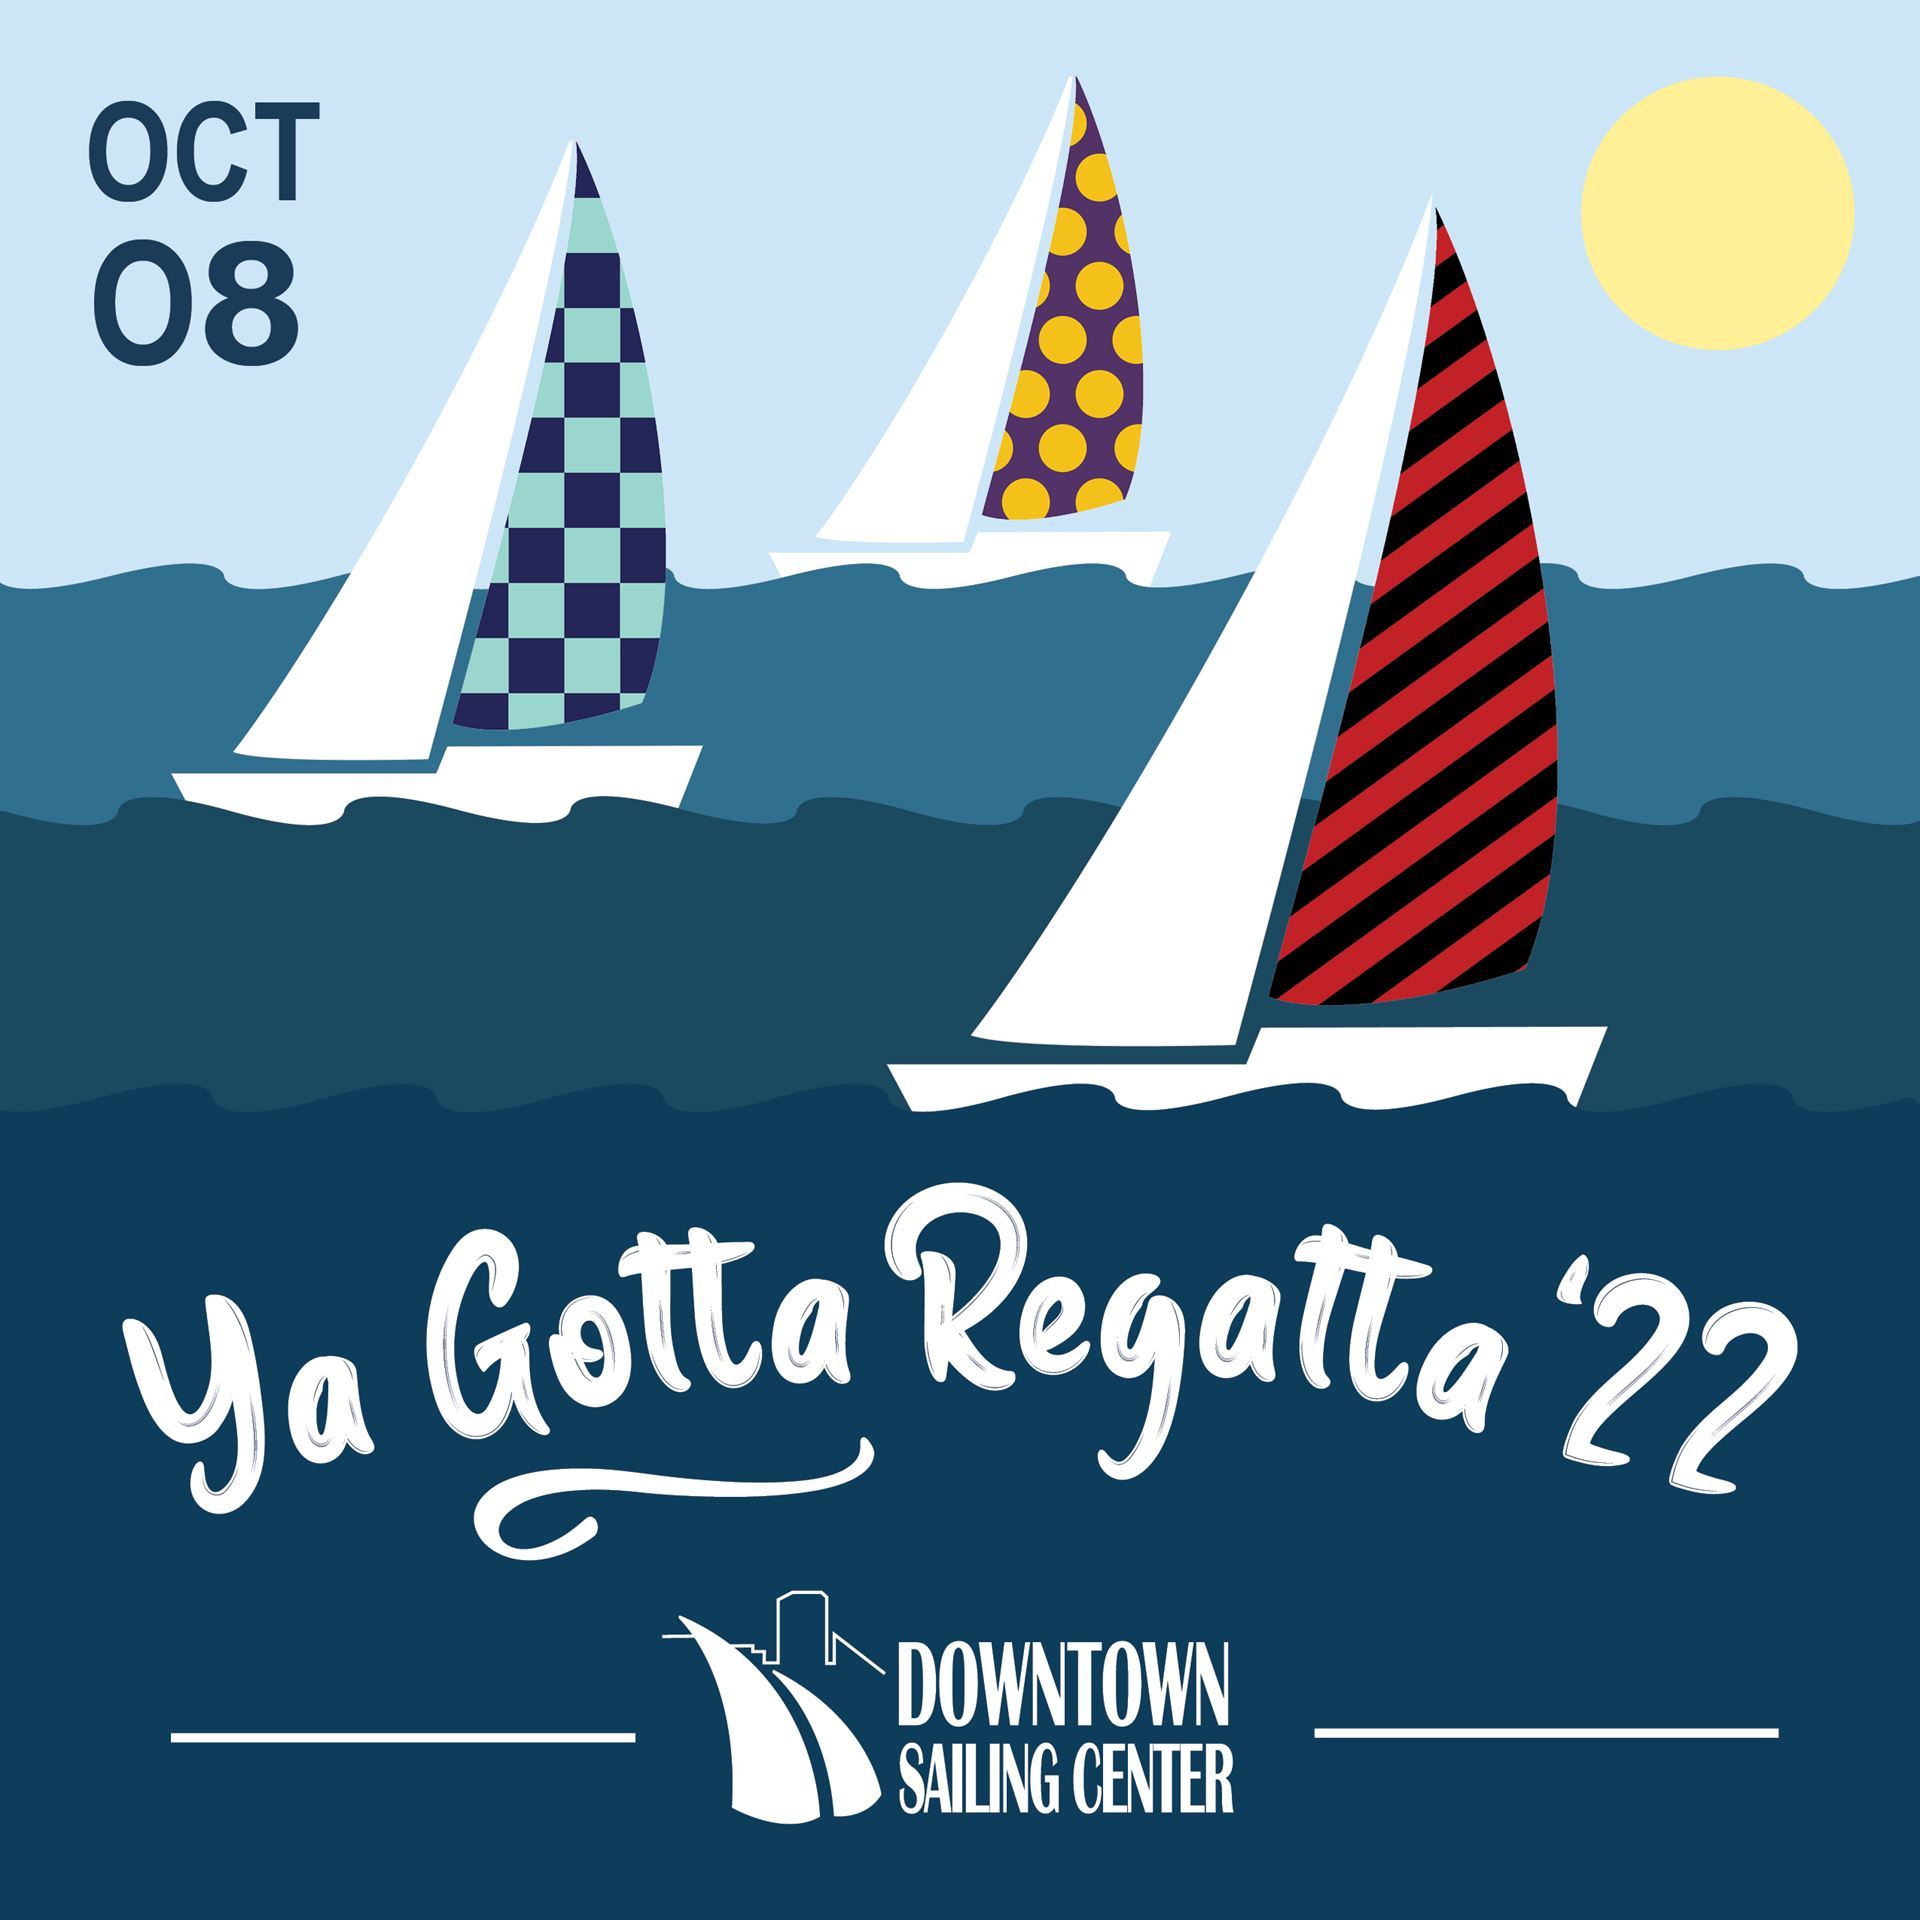 Ya Gotta Regatta '22 - Cartoon with 3 sailboats, Downtown sailing center logo - October 8th